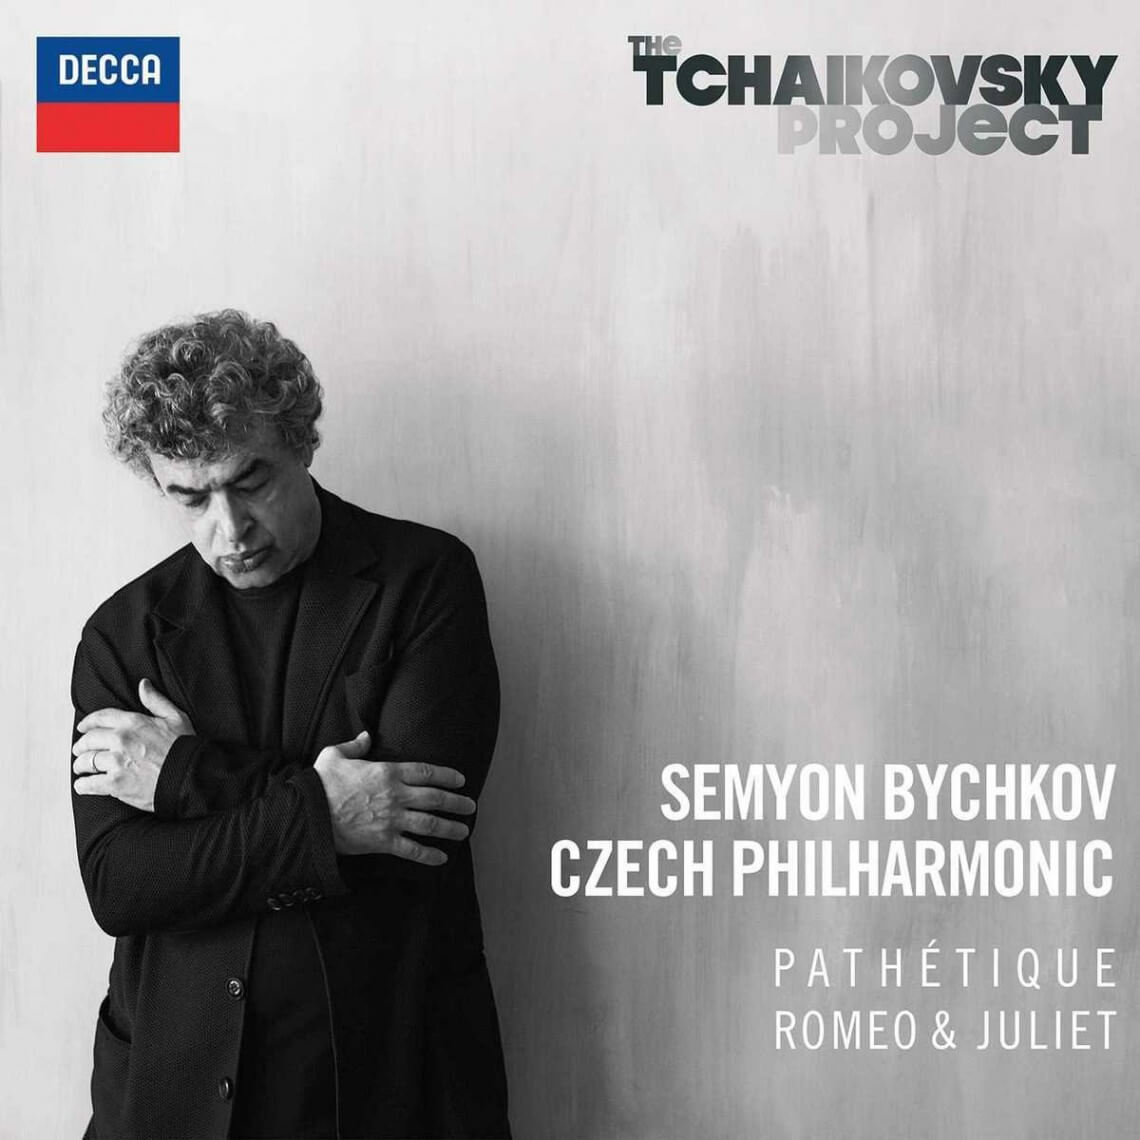 The Tchaikovsky Project: Pathetique, Romeo & Juliet